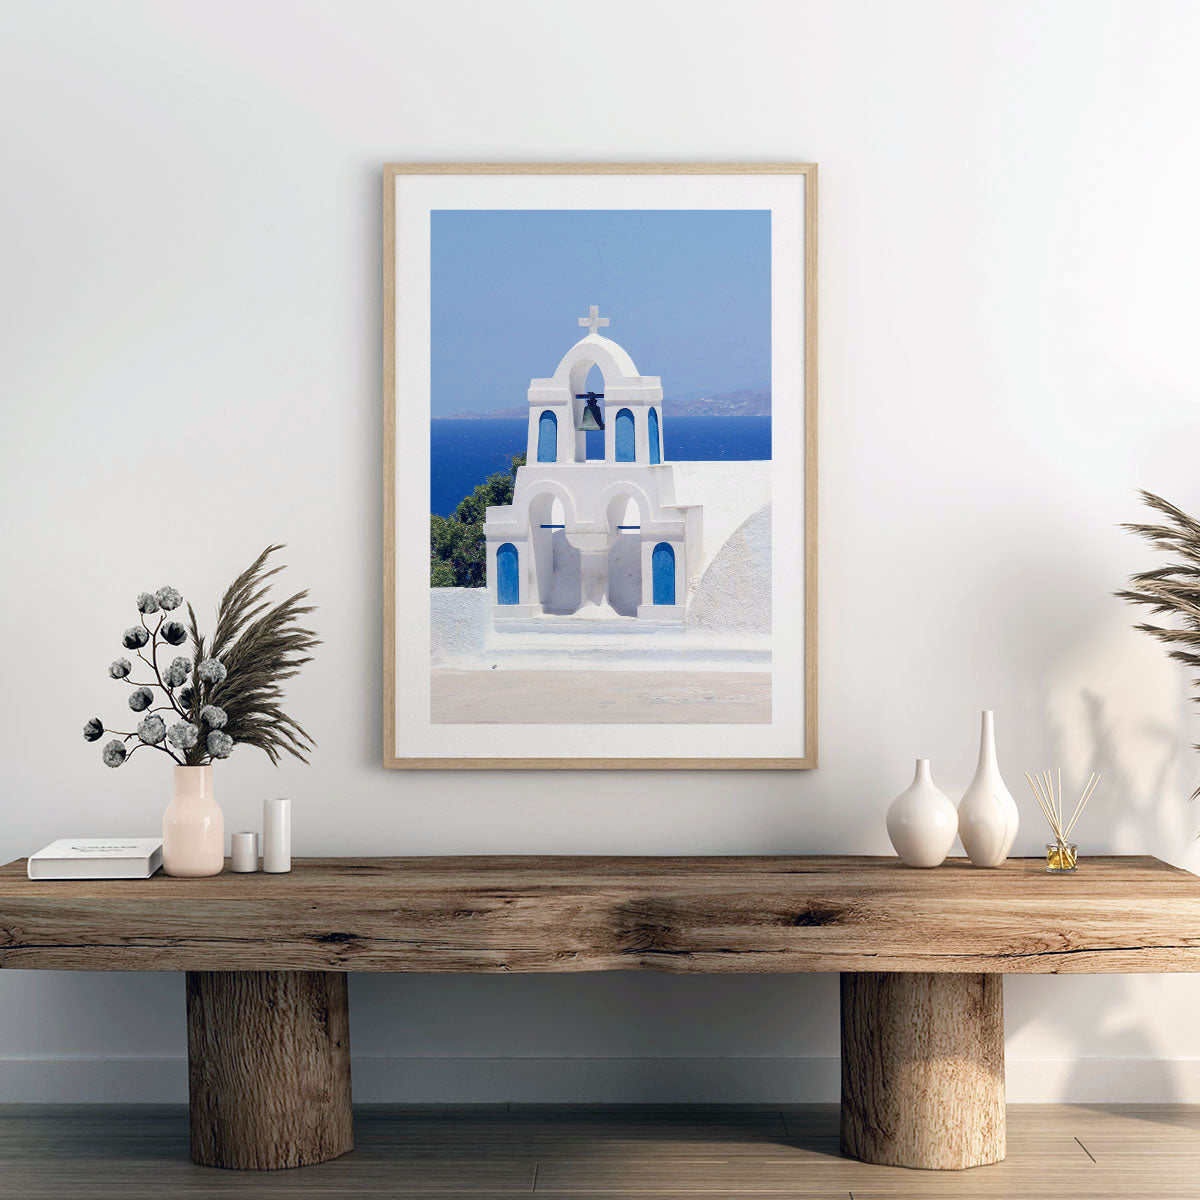 Modern coastal interior with Santorini art print